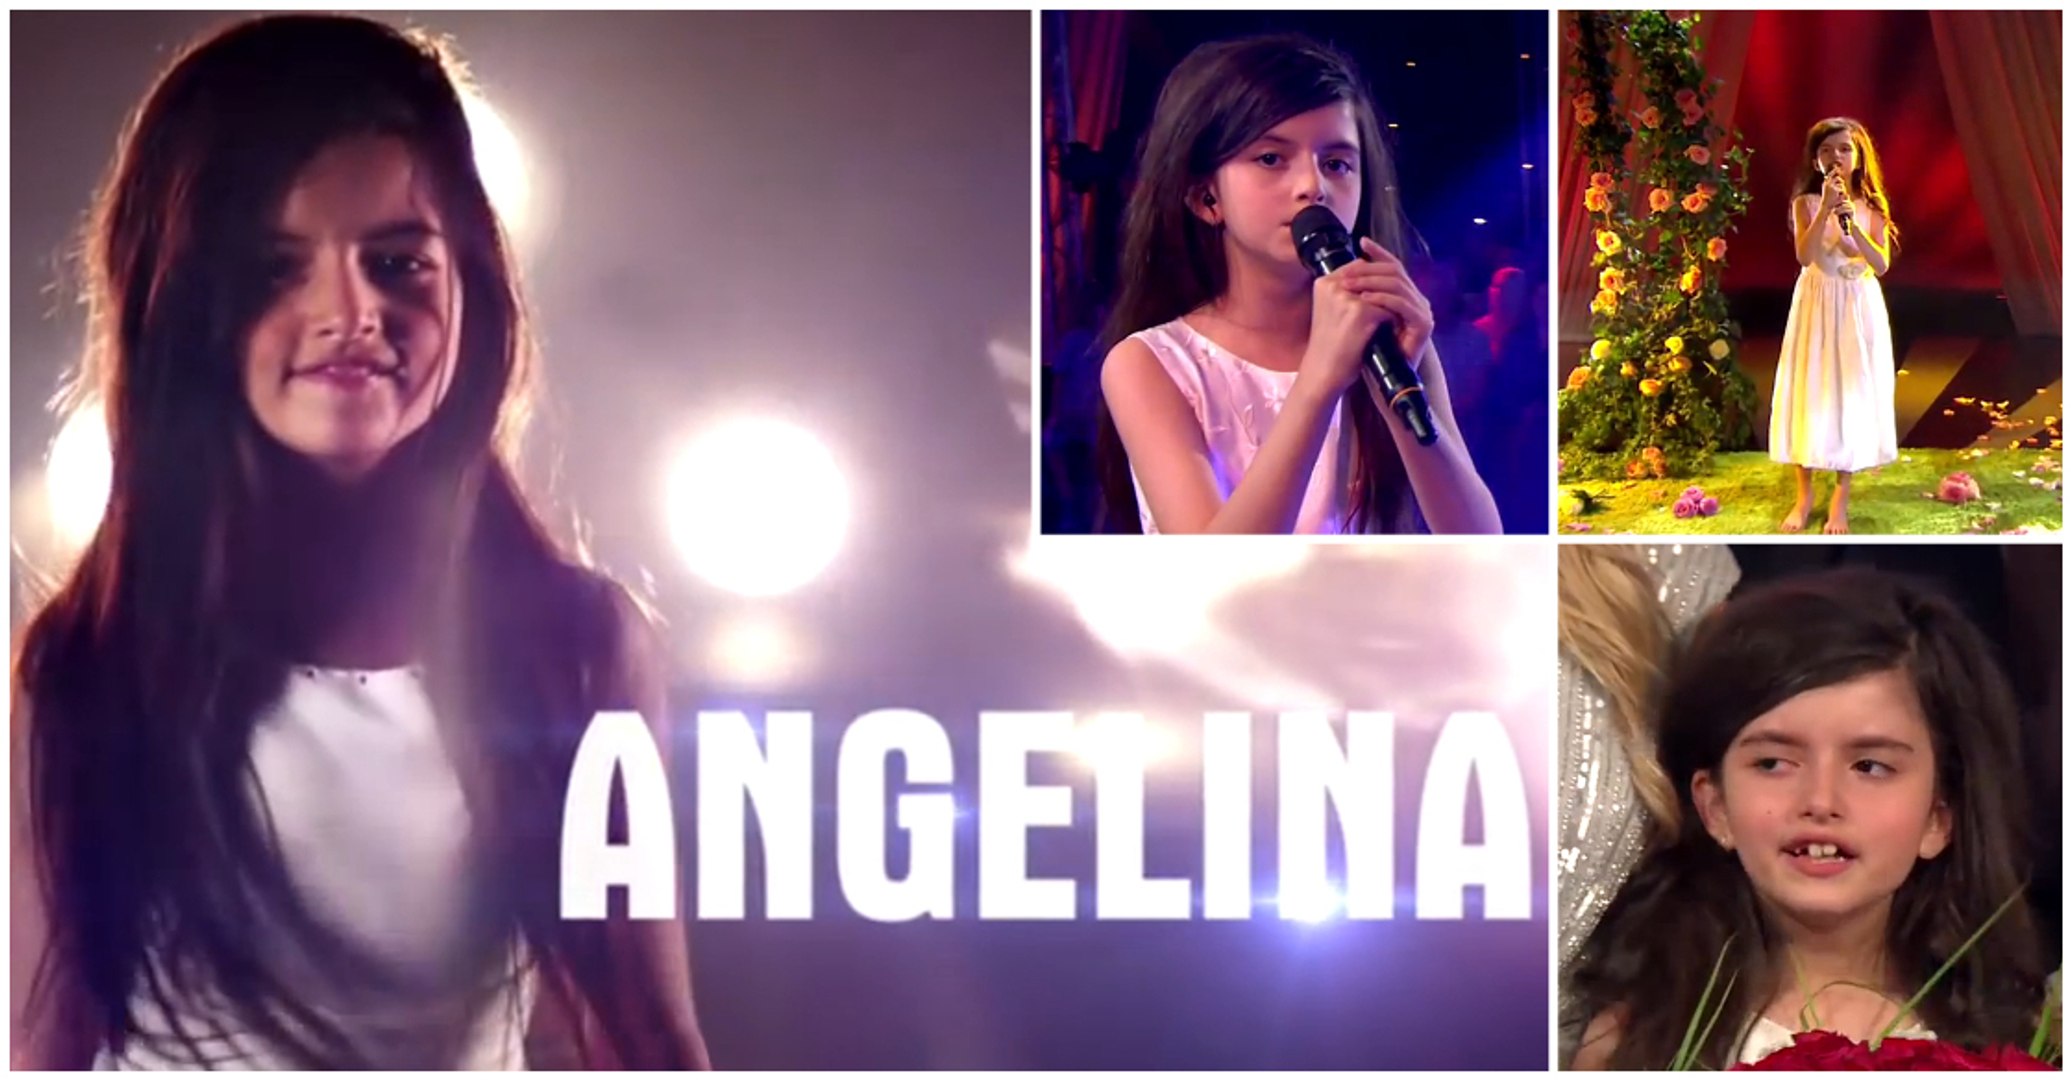 8-year-old Angelina Jordan Wins Norway's Got Talent - video